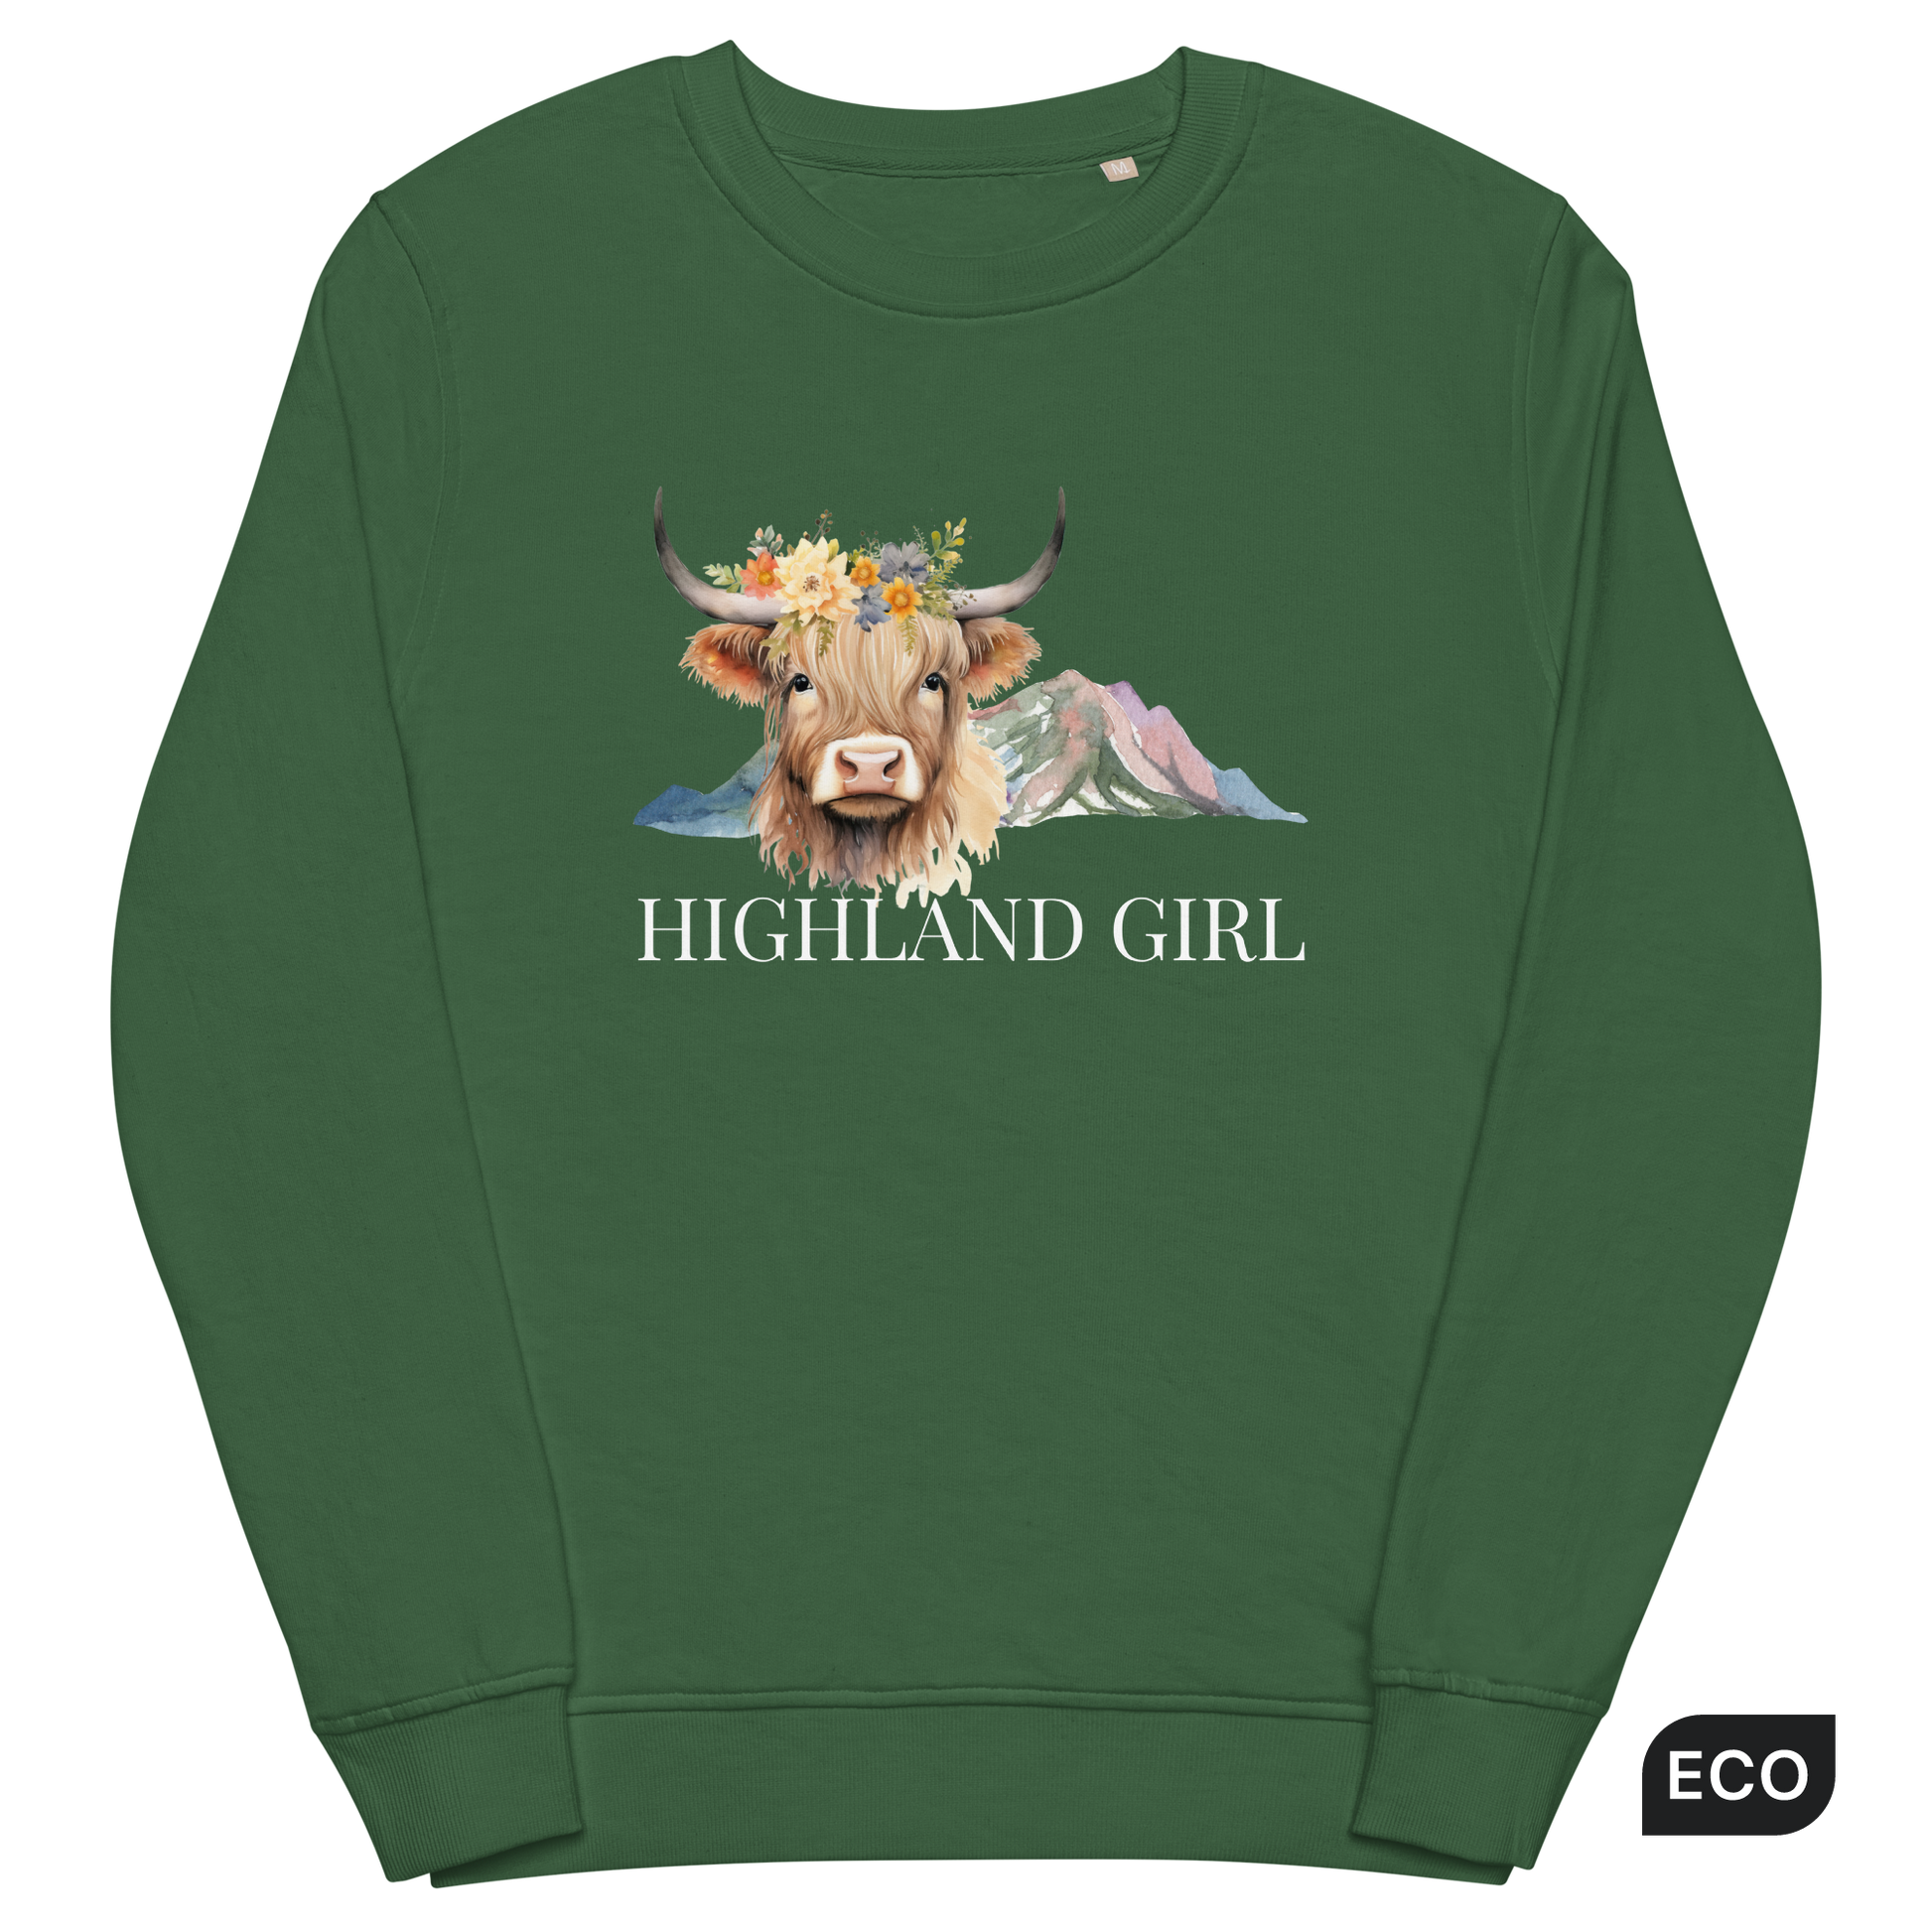 Bottle Green Organic Cotton Highland Cow Sweatshirt showcasing an adorable Highland Girl graphic on the chest - Cute Graphic Highland Cow Sweatshirts - Boozy Fox